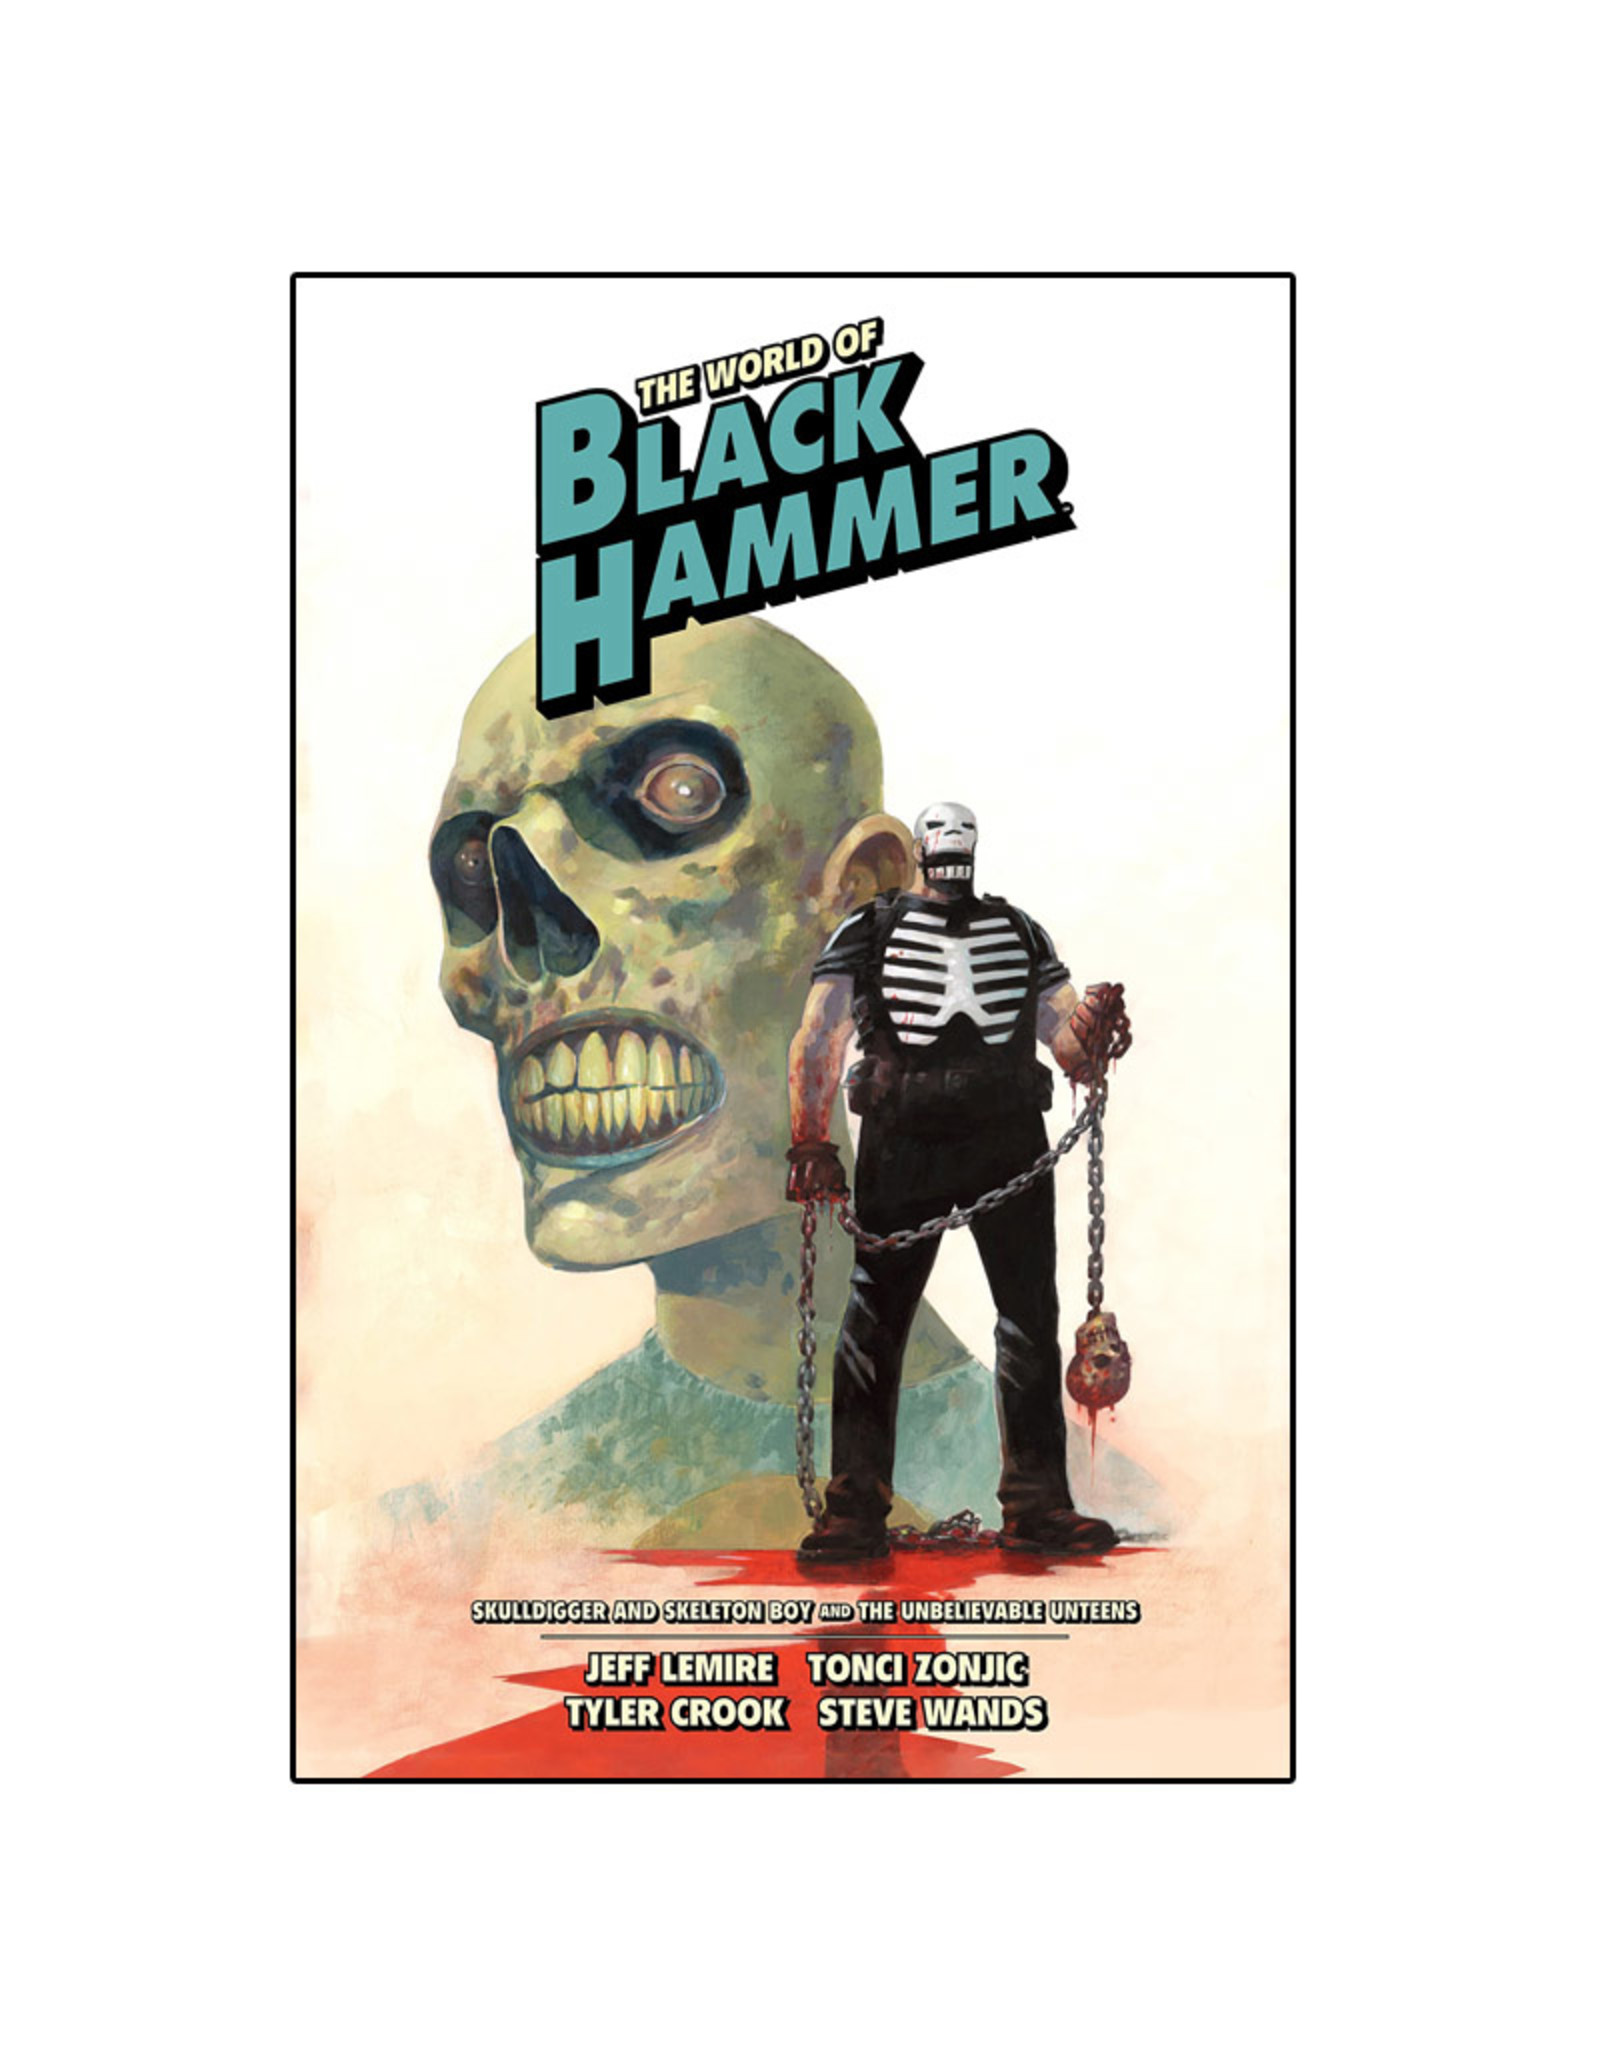 Dark Horse Comics World of Black Hammer HC Volume 04